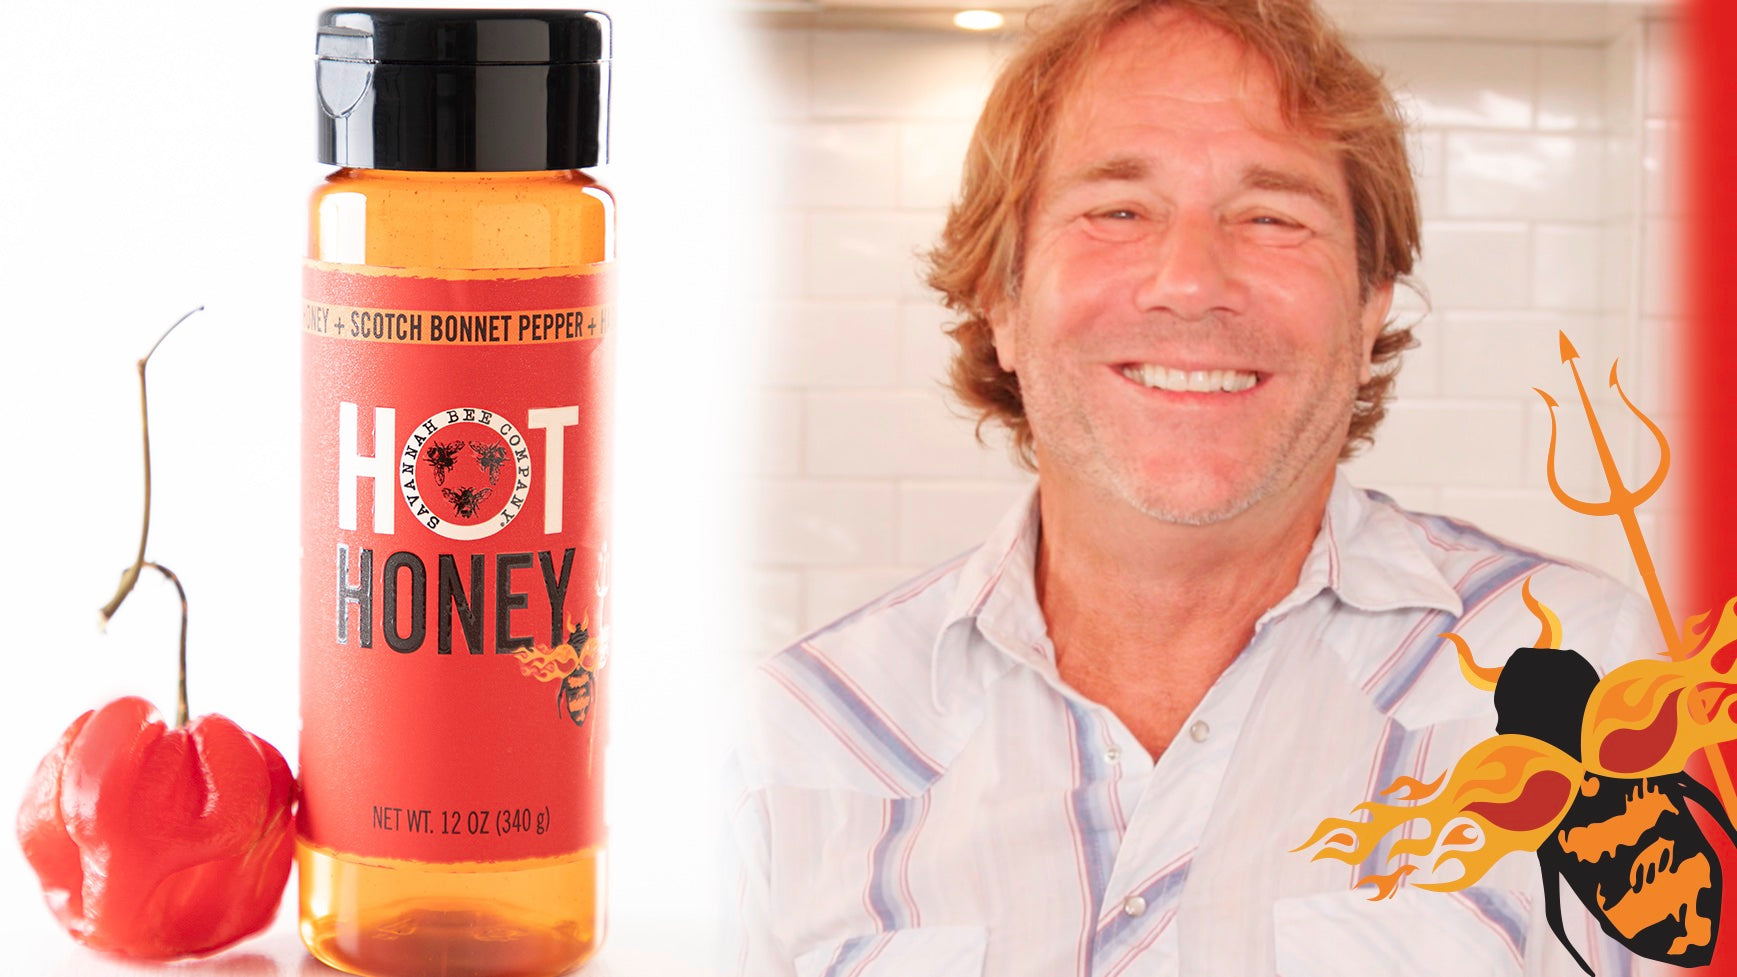 Firebee Crafted Honey Individual Squeeze Bottles – Firebee Honey